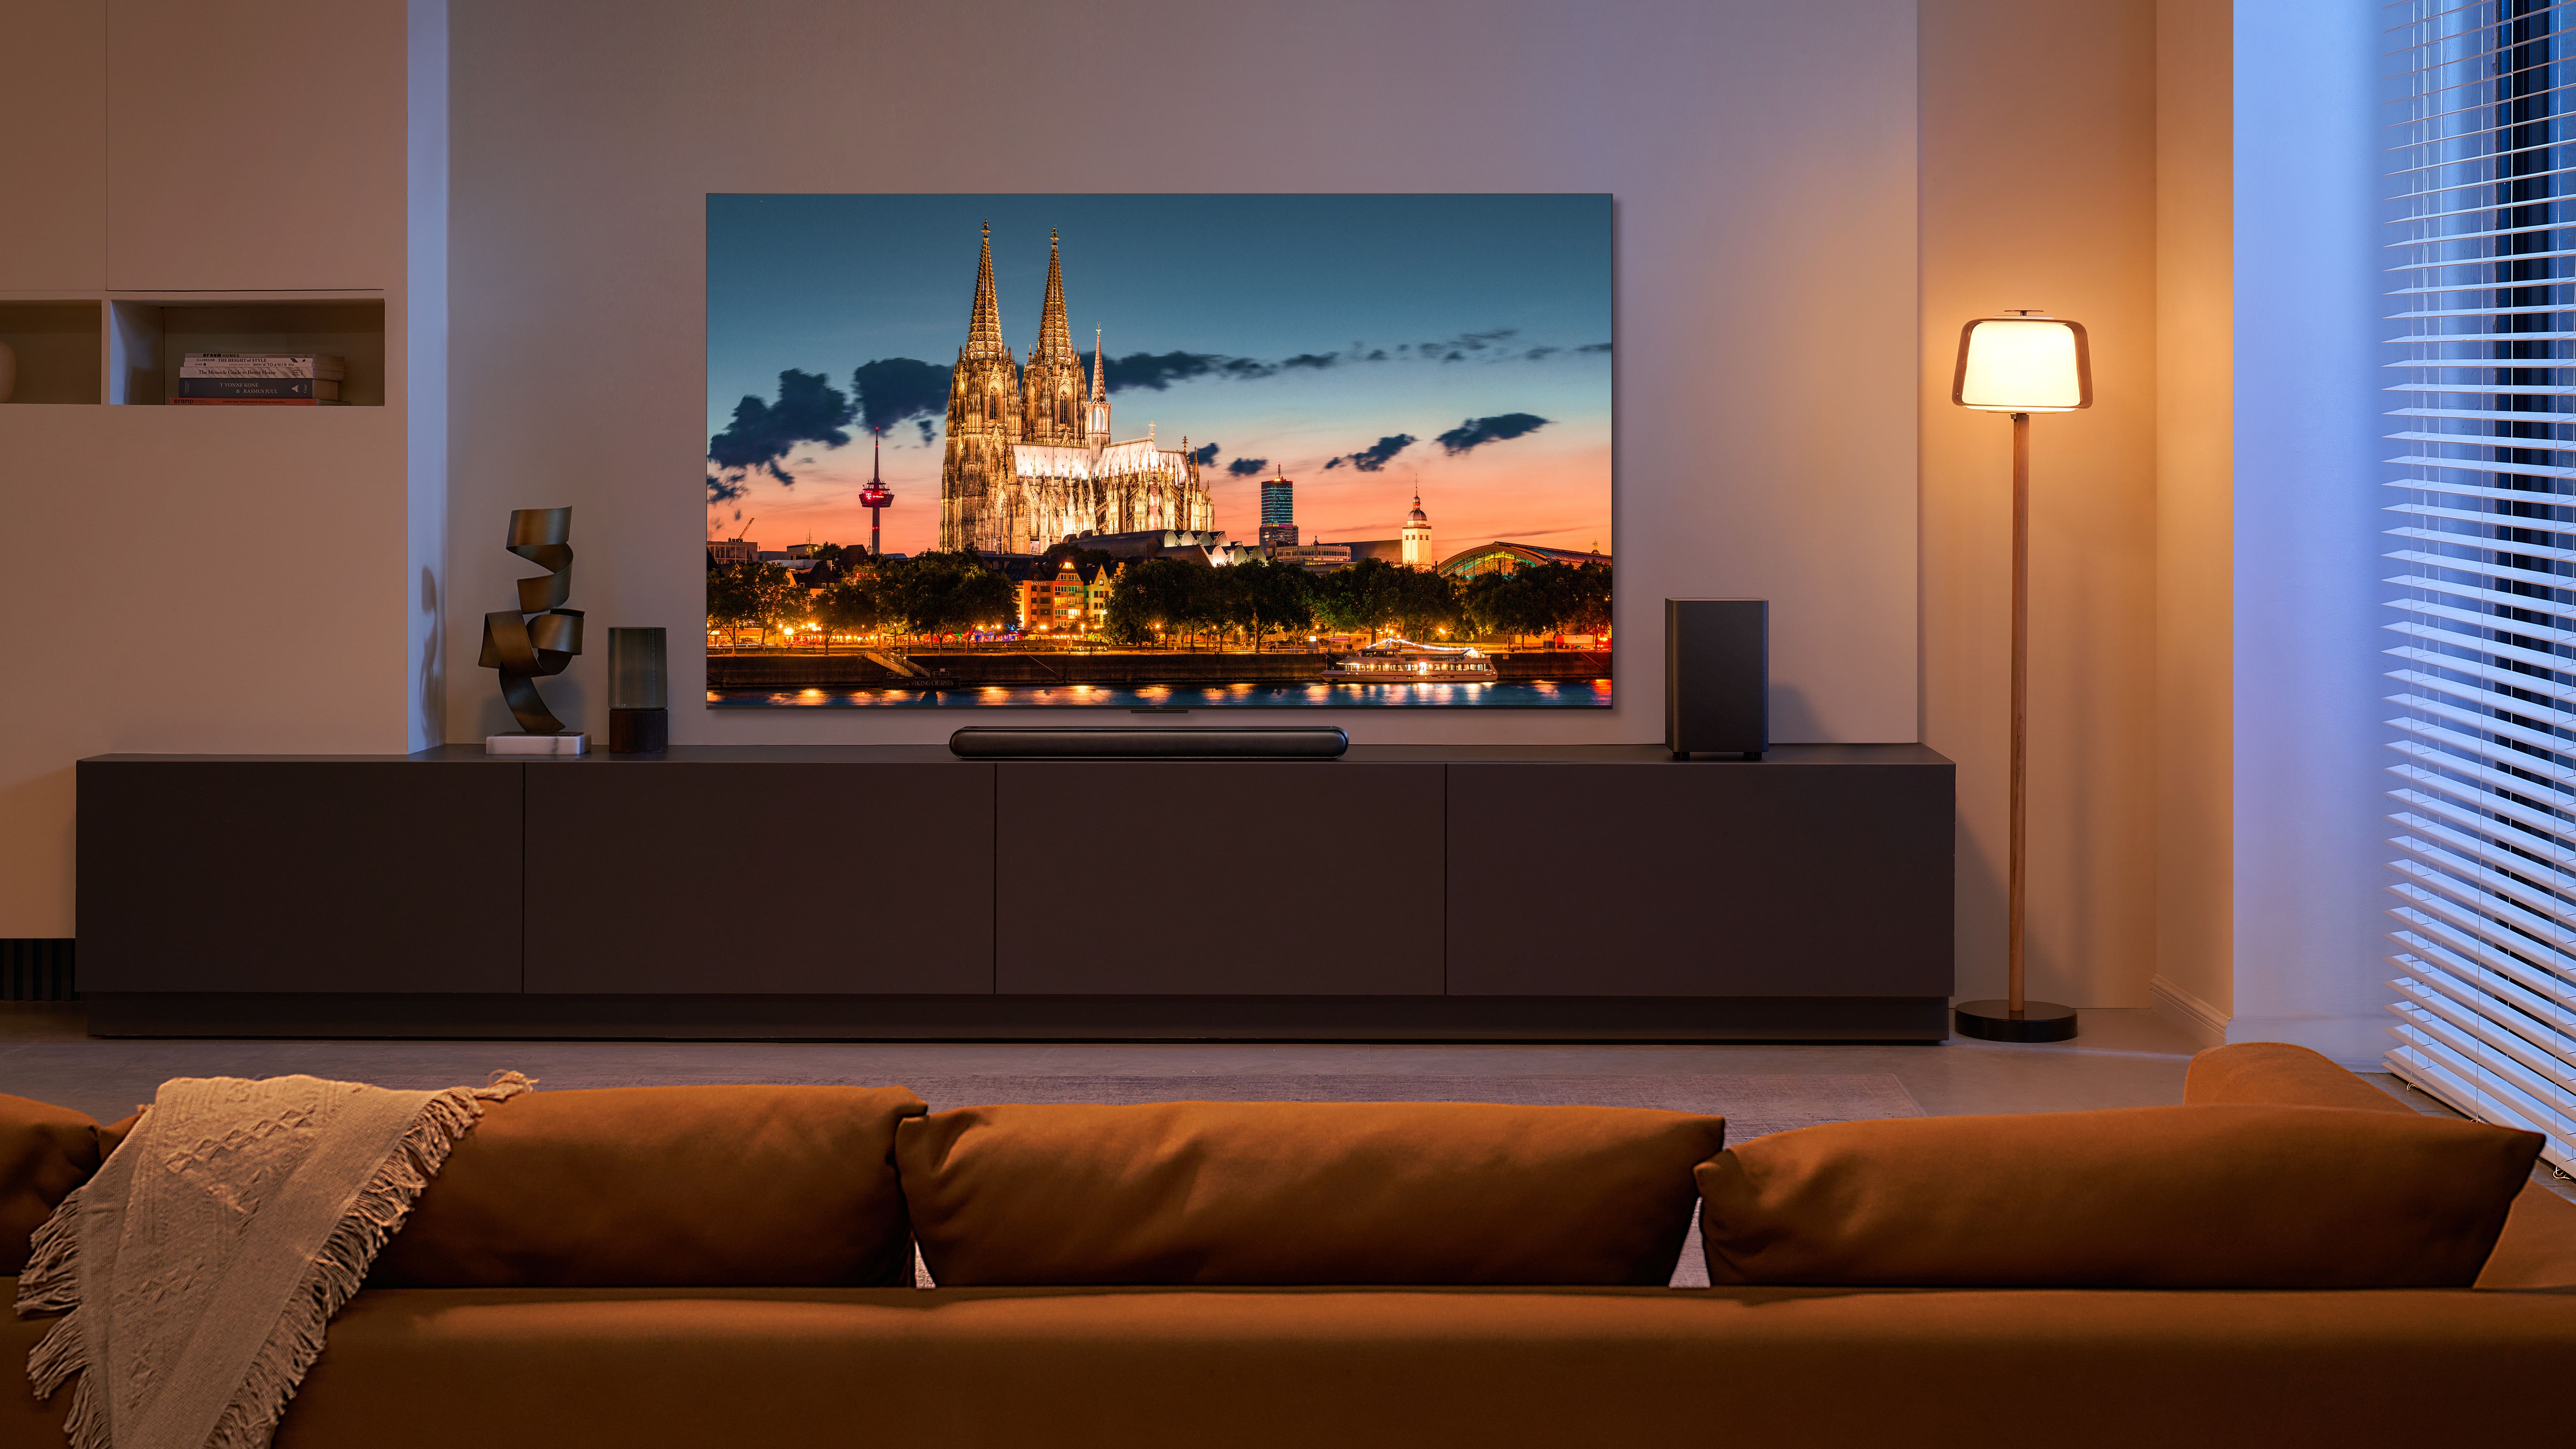 C955 TCL tv mounted on livingroom wall